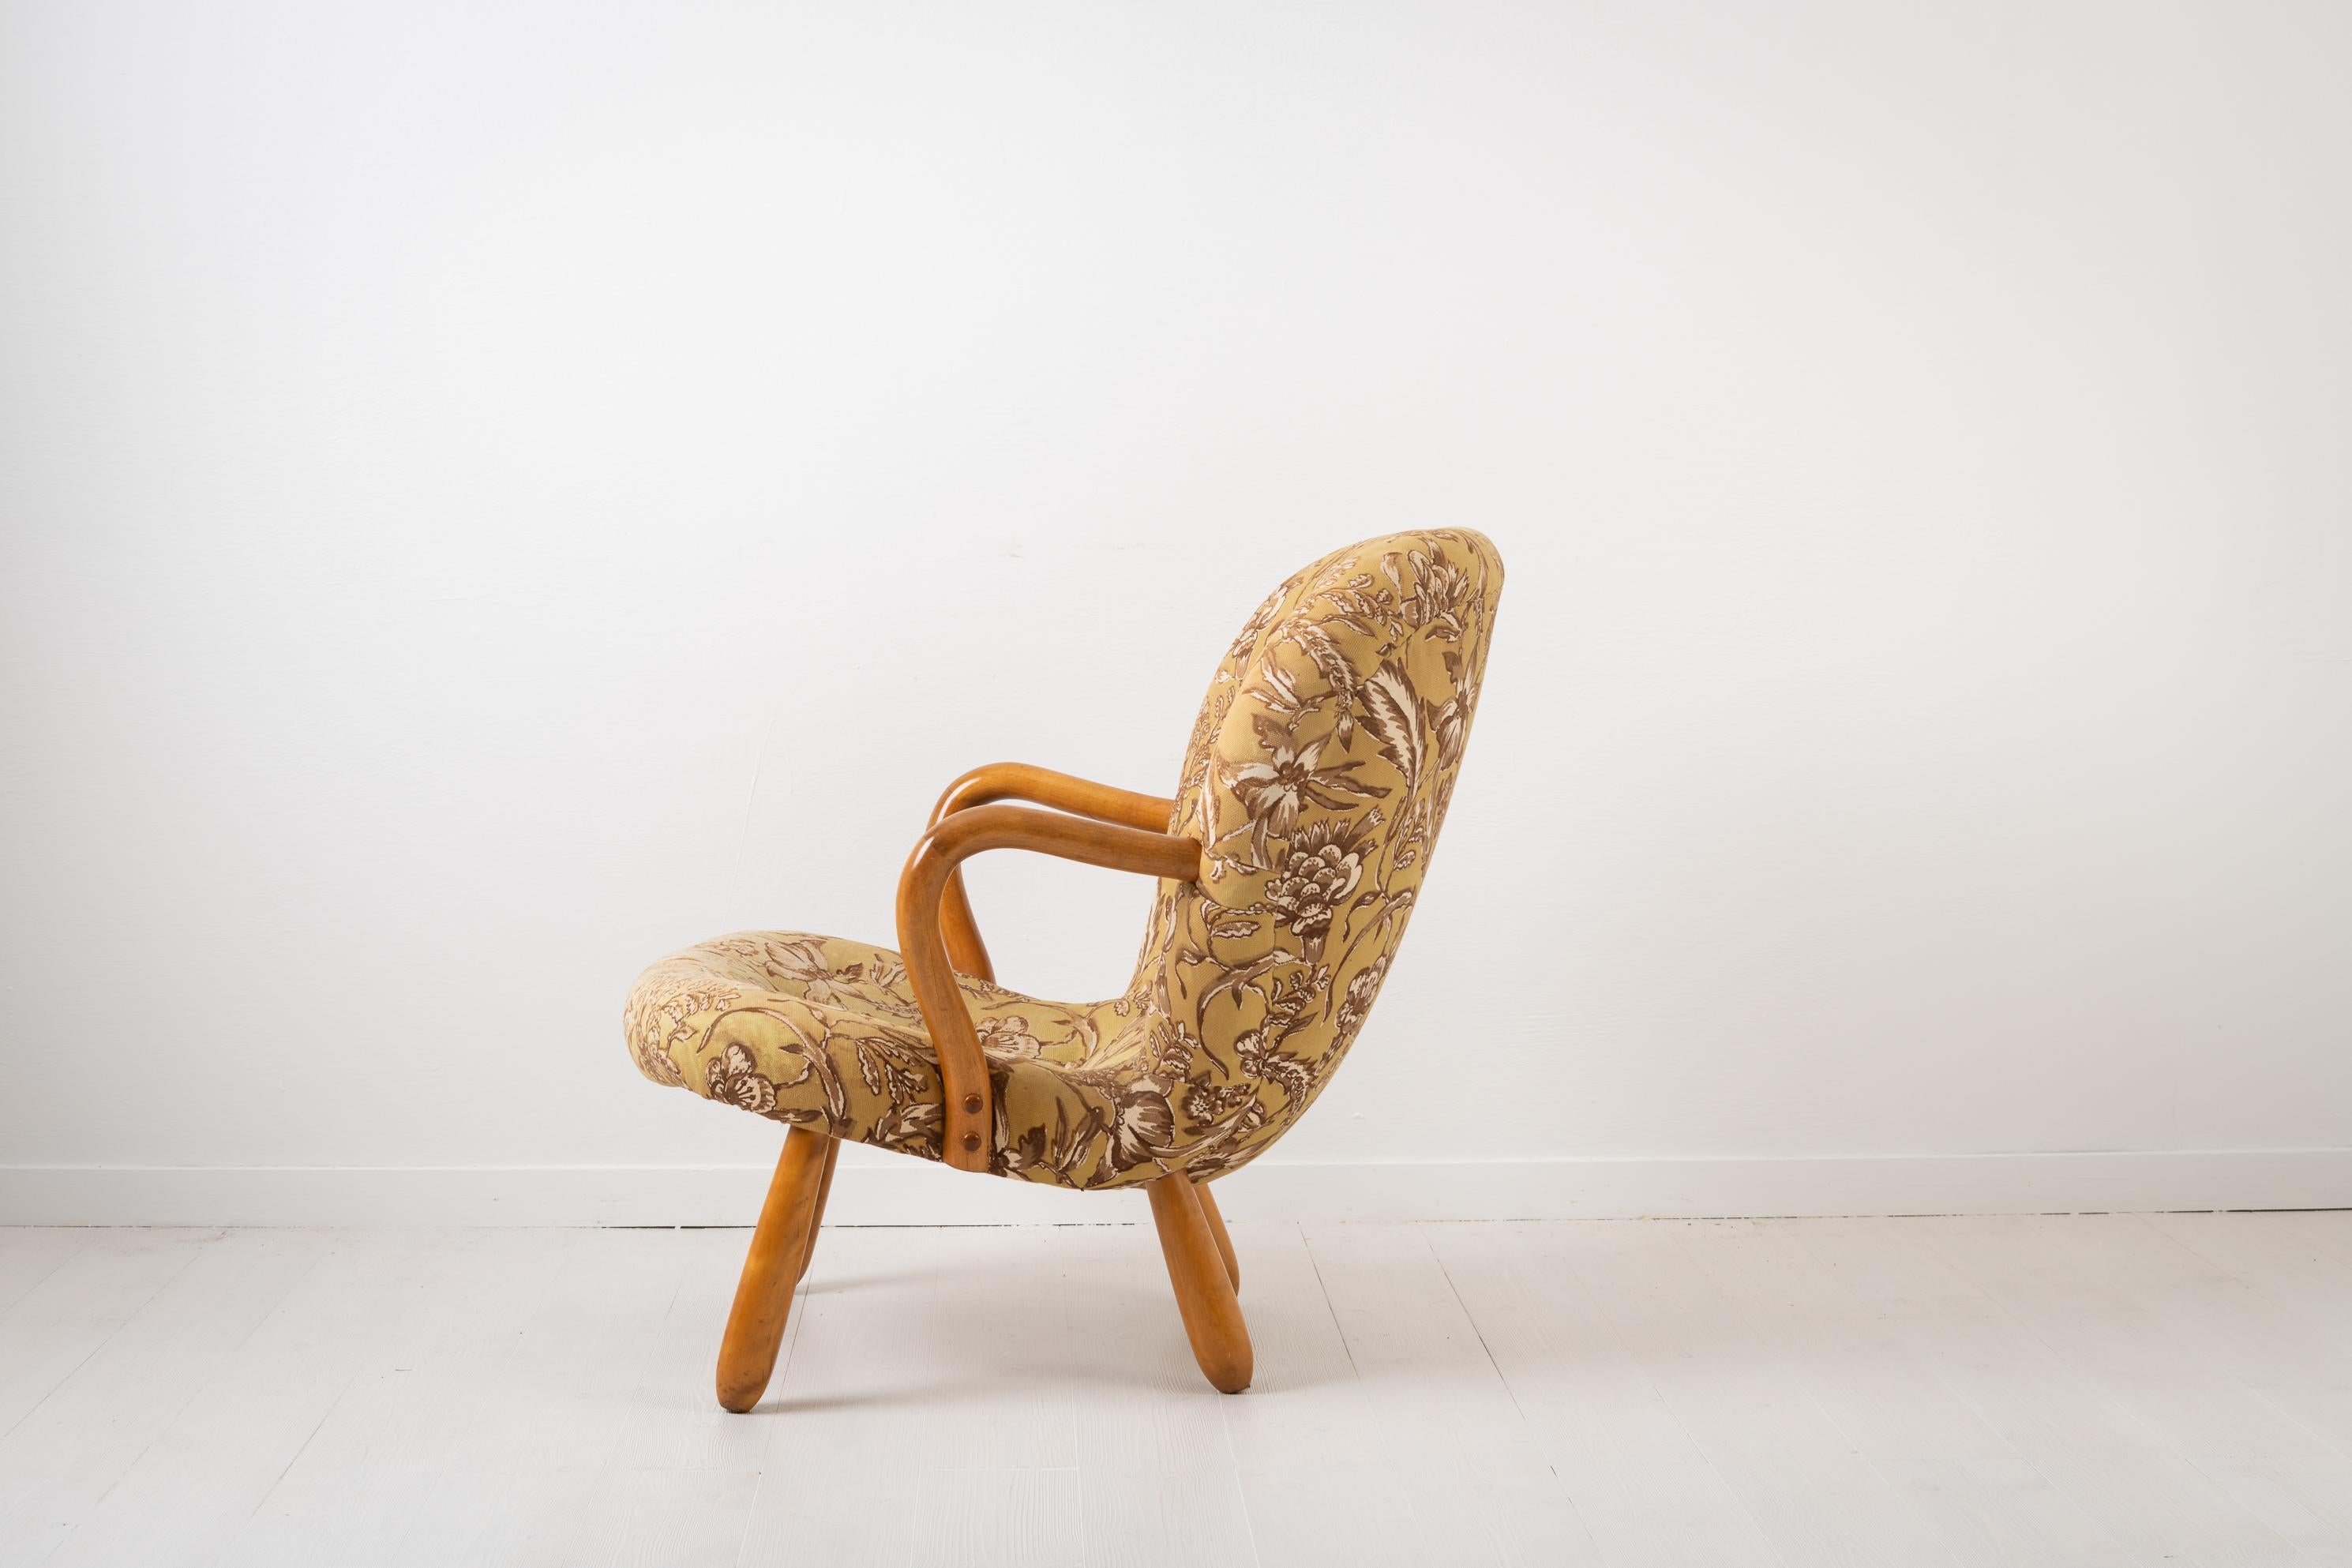 Hardwood Scandinavian Modern Clam Chair Attributed to Philip Arctander